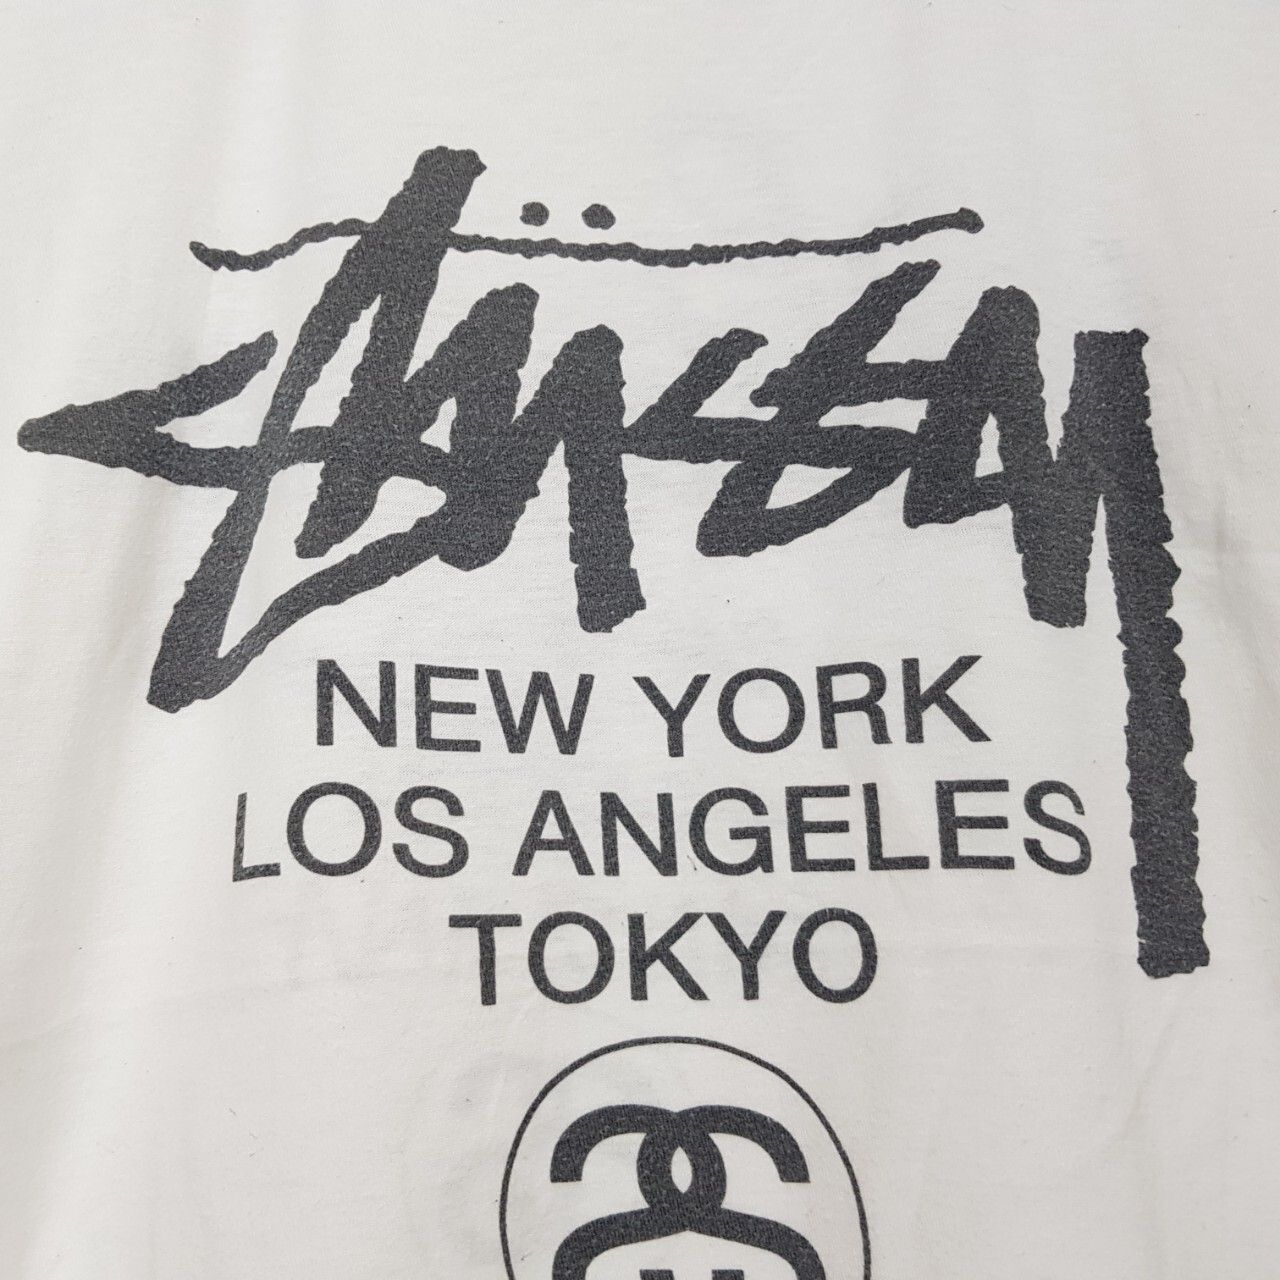 Stussy STUSSY Shirt New York Los Angeles Tokyo London Paris Size US S / EU 44-46 / 1 - 7 Thumbnail